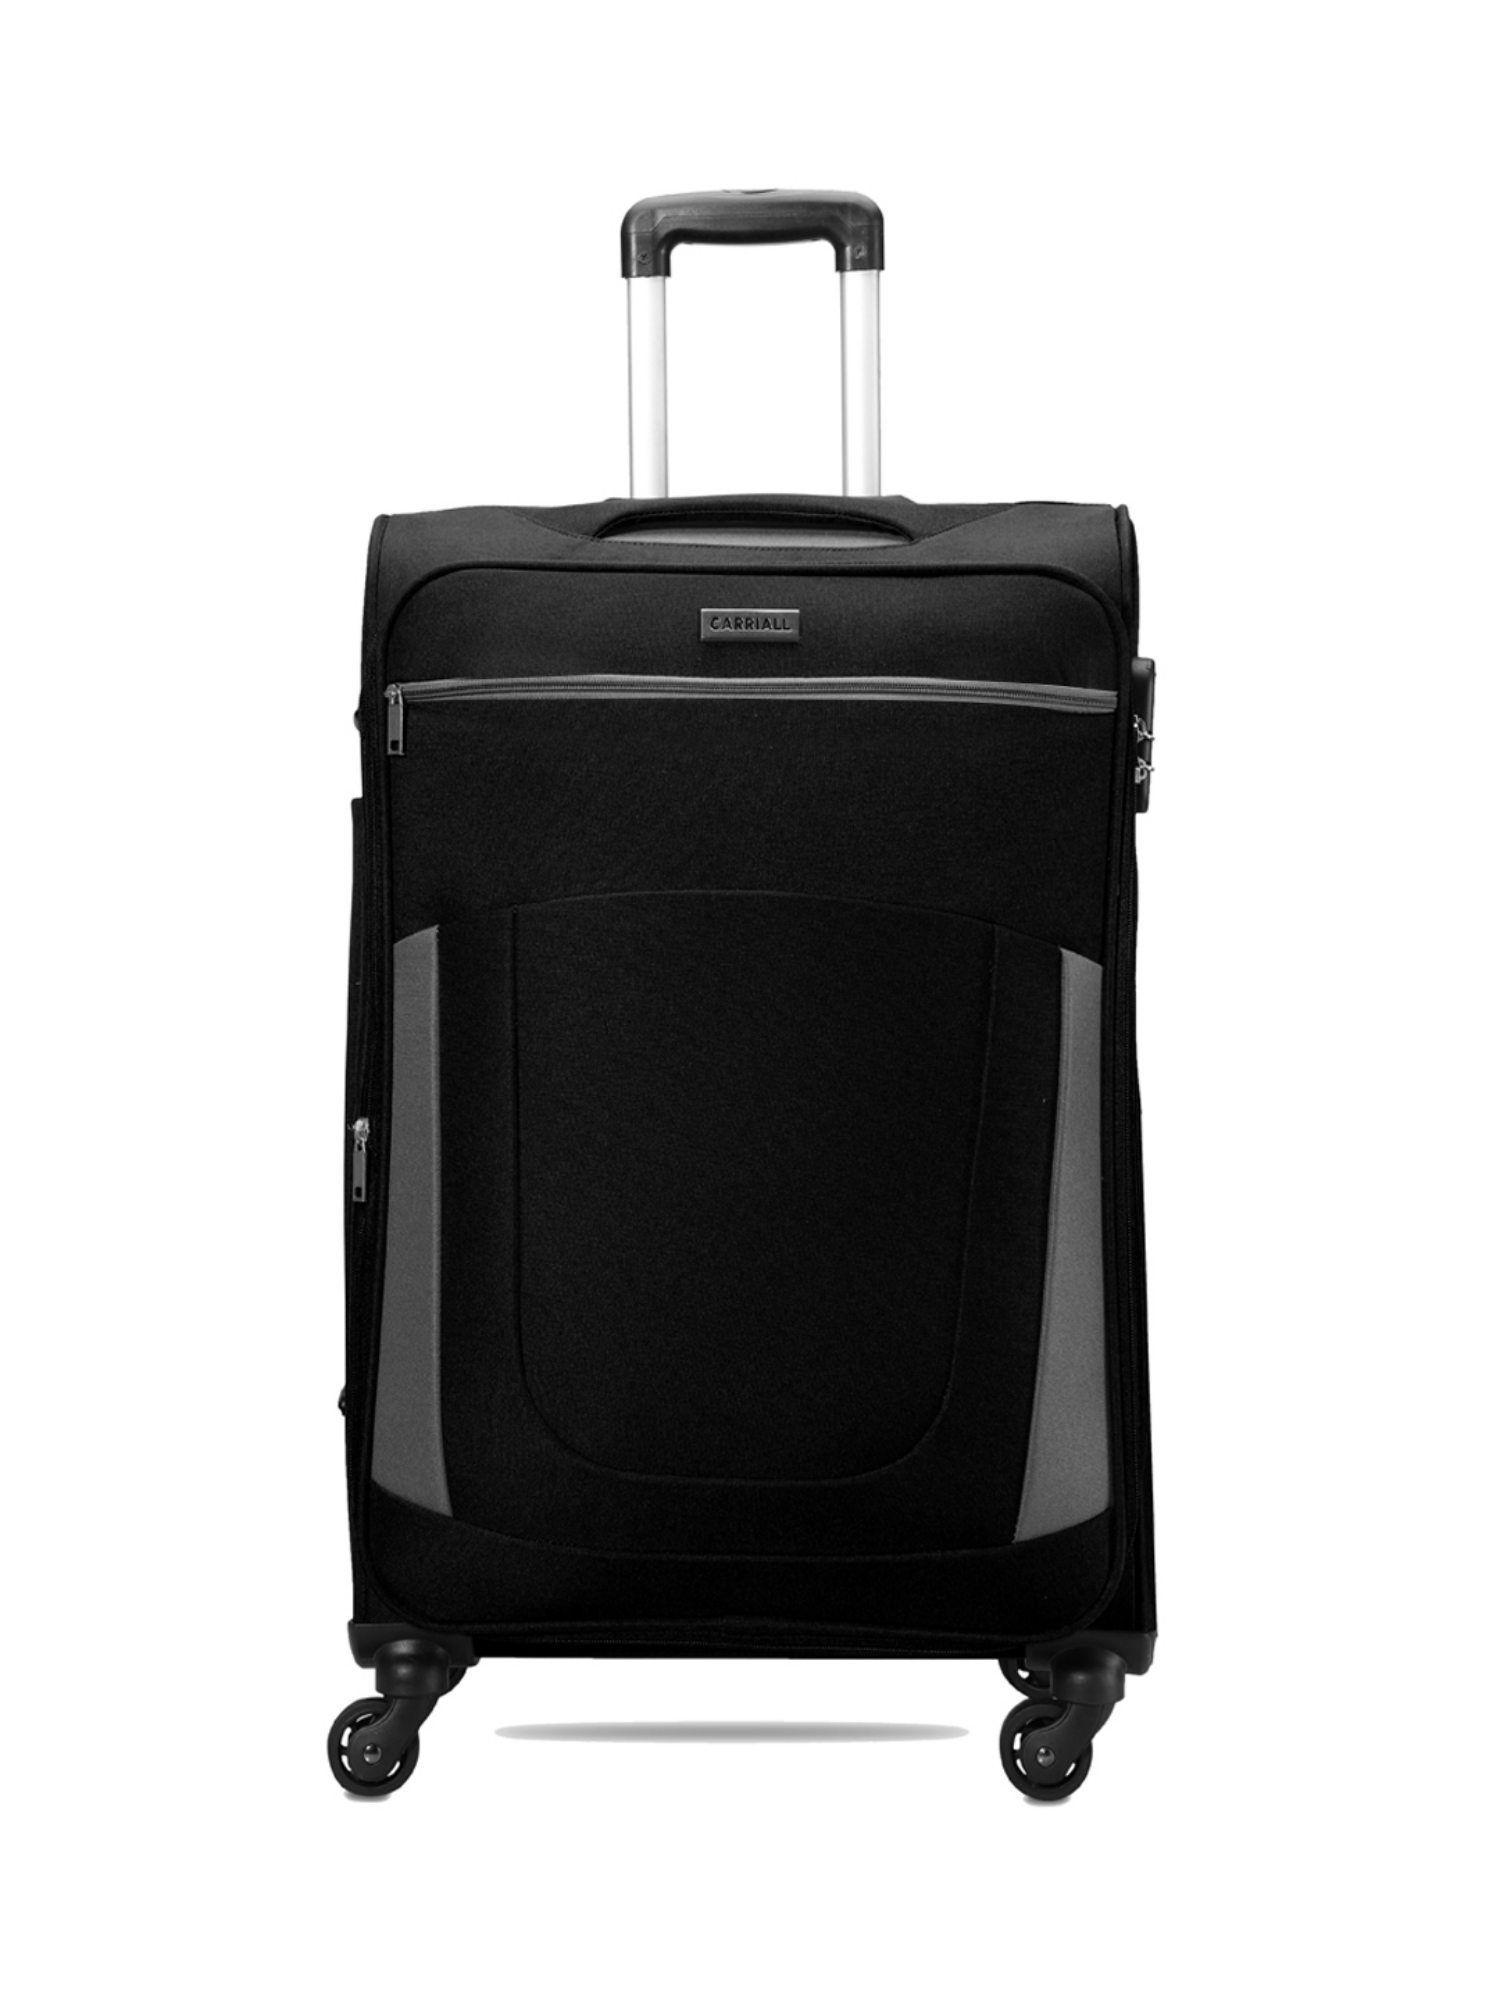 sleek black cabin luggage bag